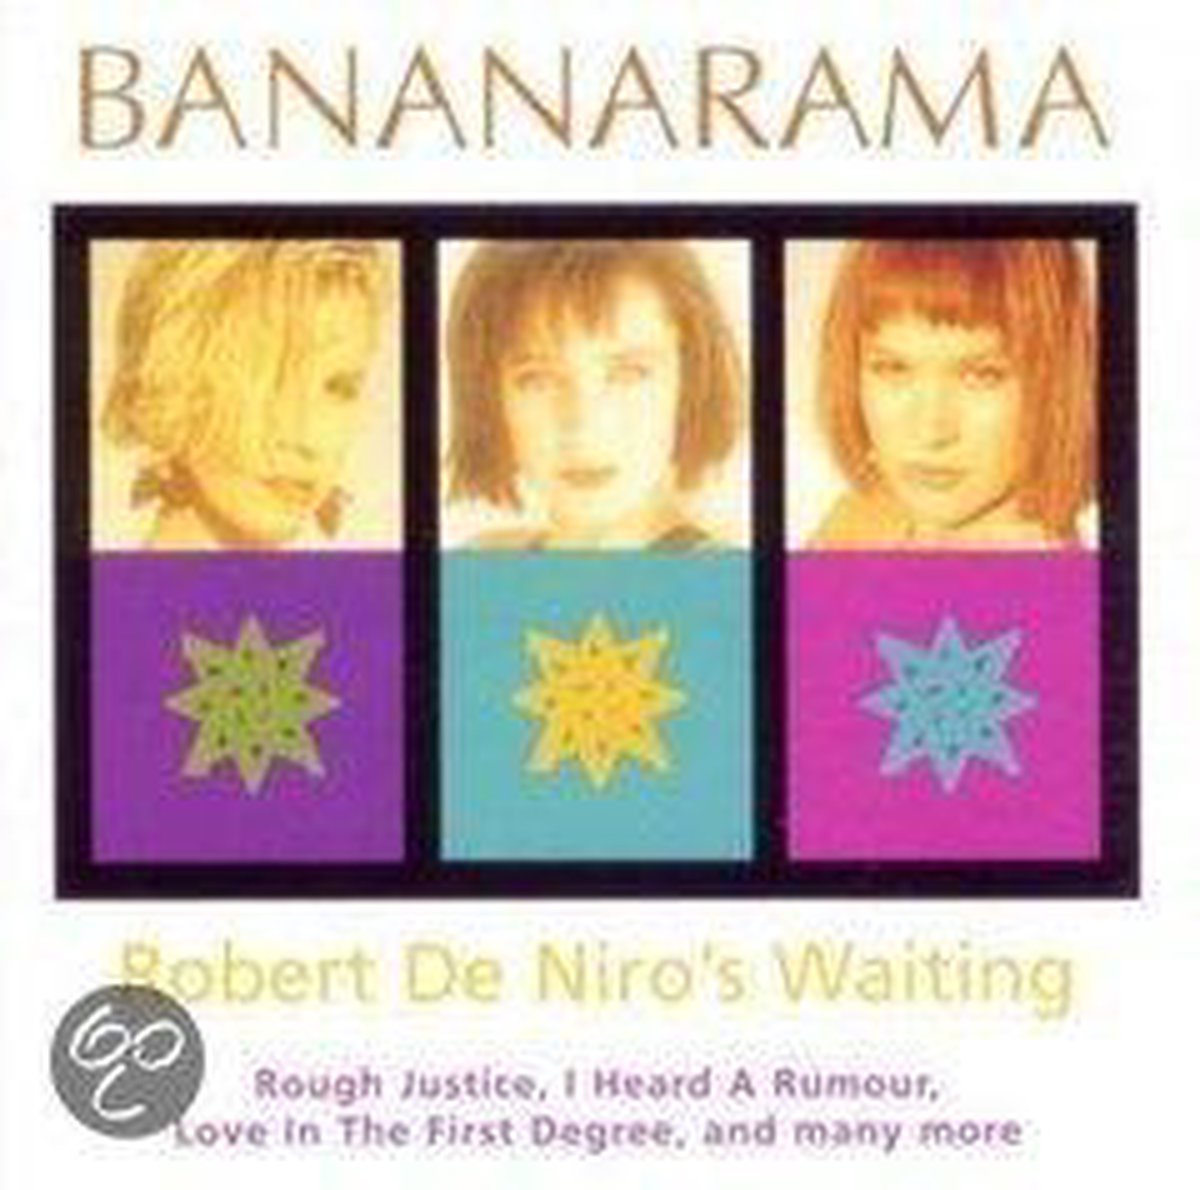 Robert De Niro's Waiting - Bananarama